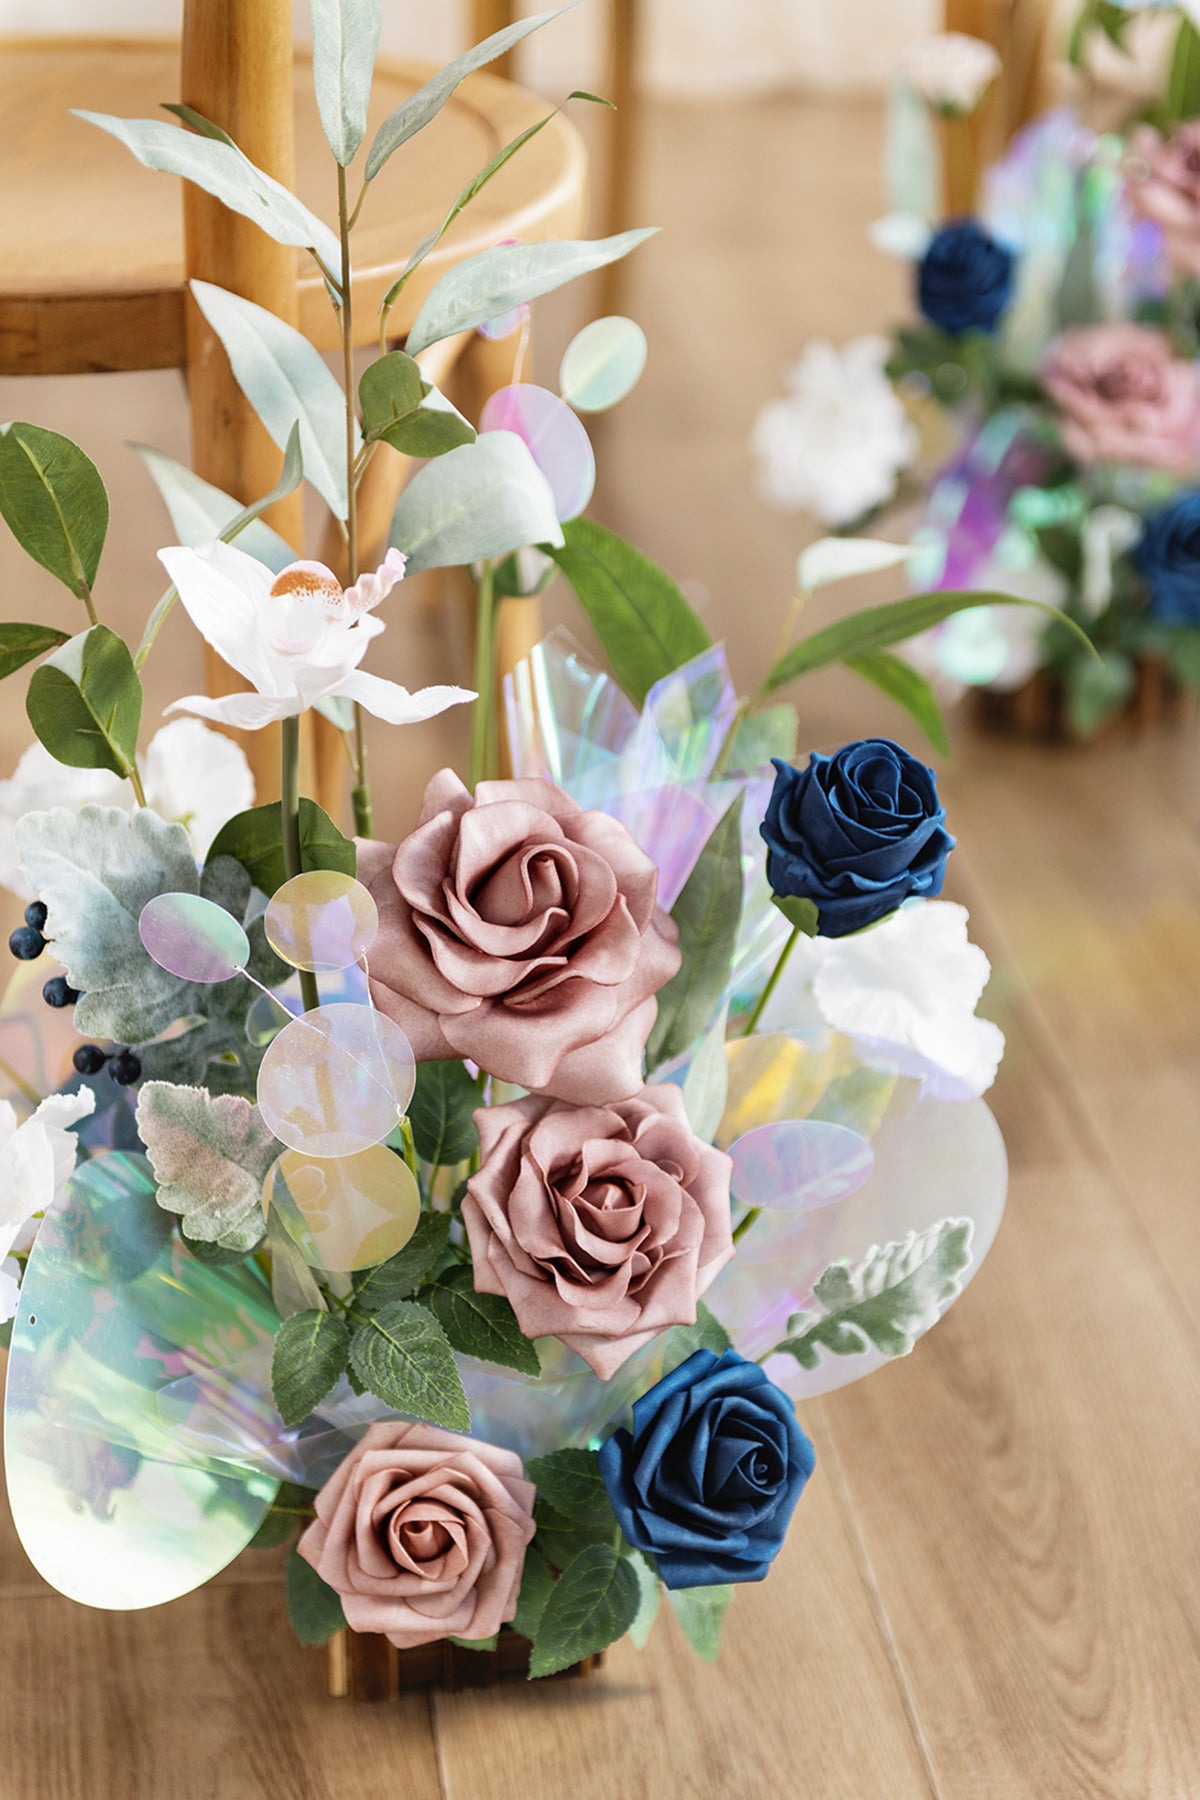 Wedding Aisle Runner Flower Arrangements in Dusty Rose & Navy